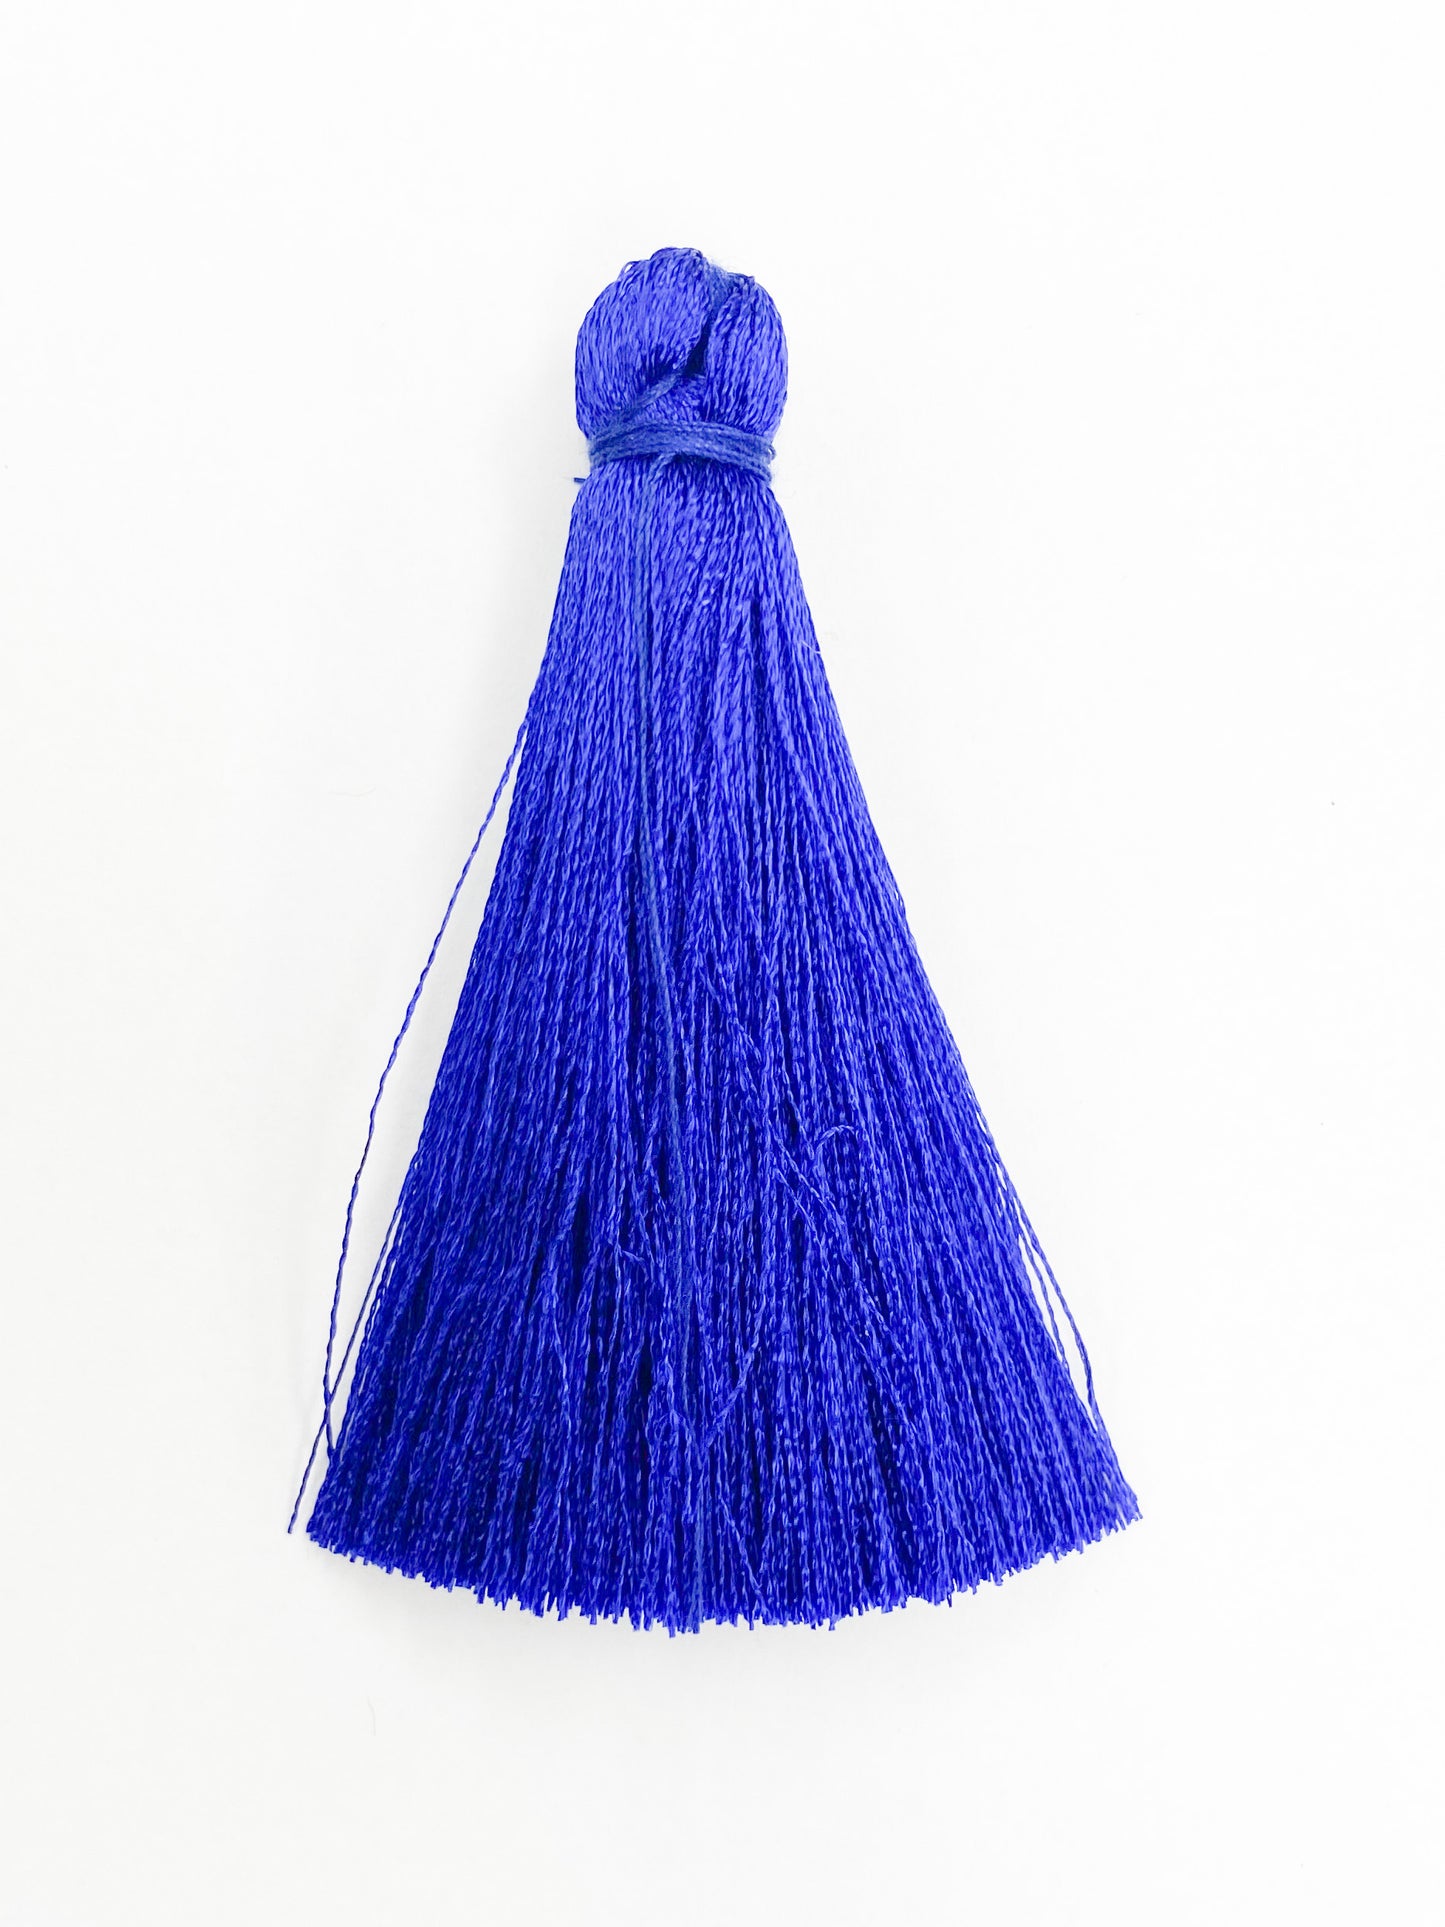 Dark Blue Coloured Tassel, 65mmL x 10mm. Polyester fibre.